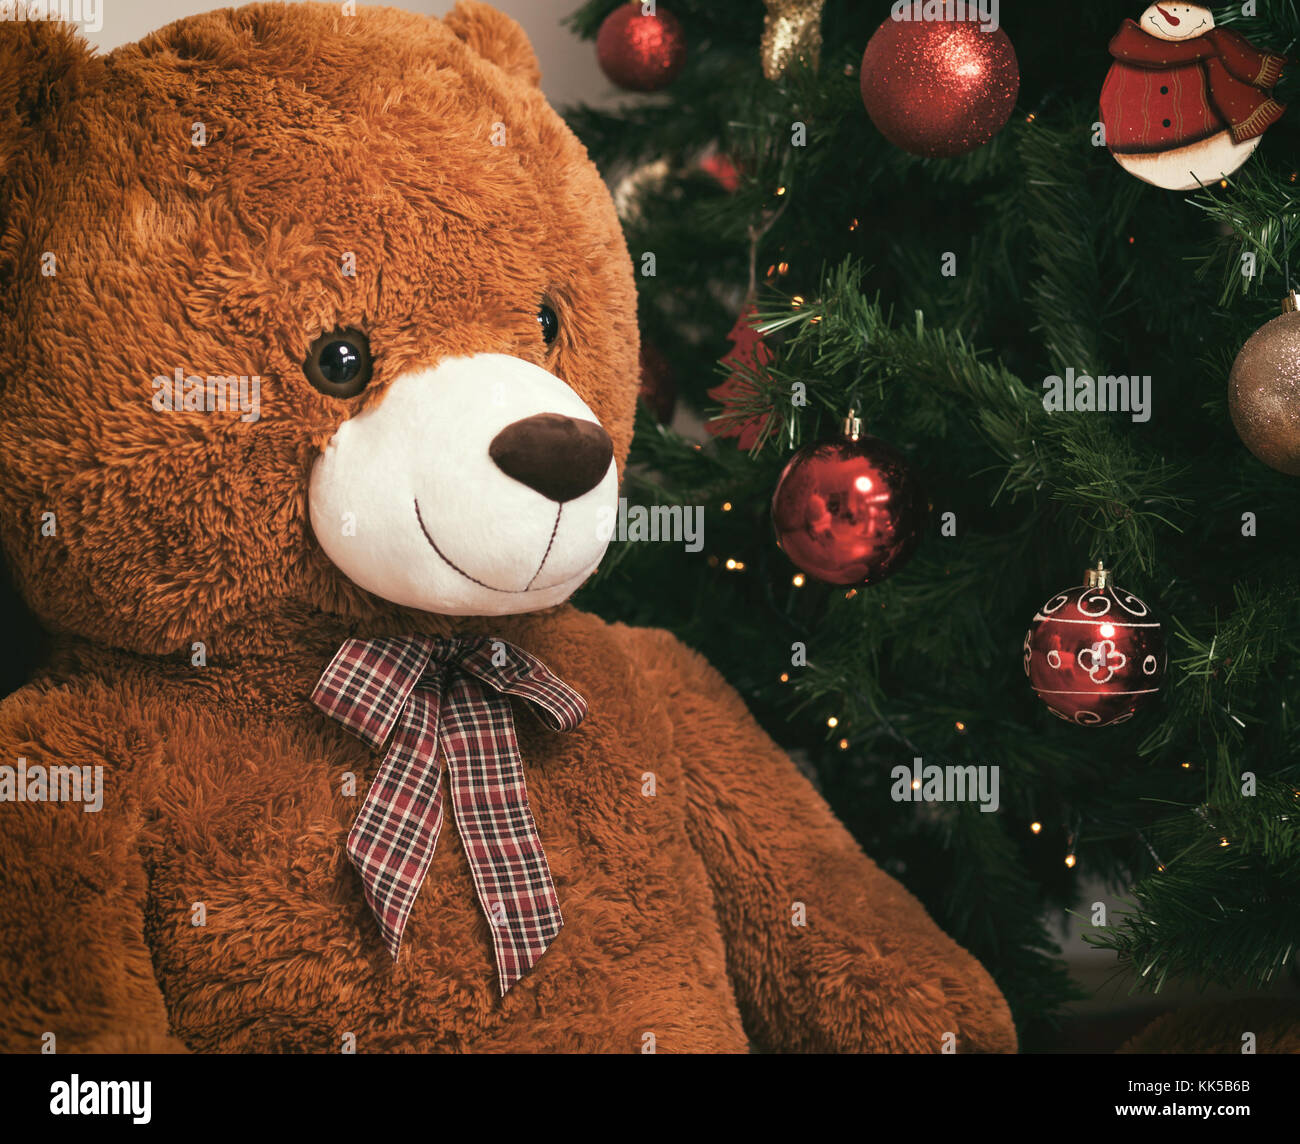 Teddy bear near christmas tree with gifts Stock Photo - Alamy